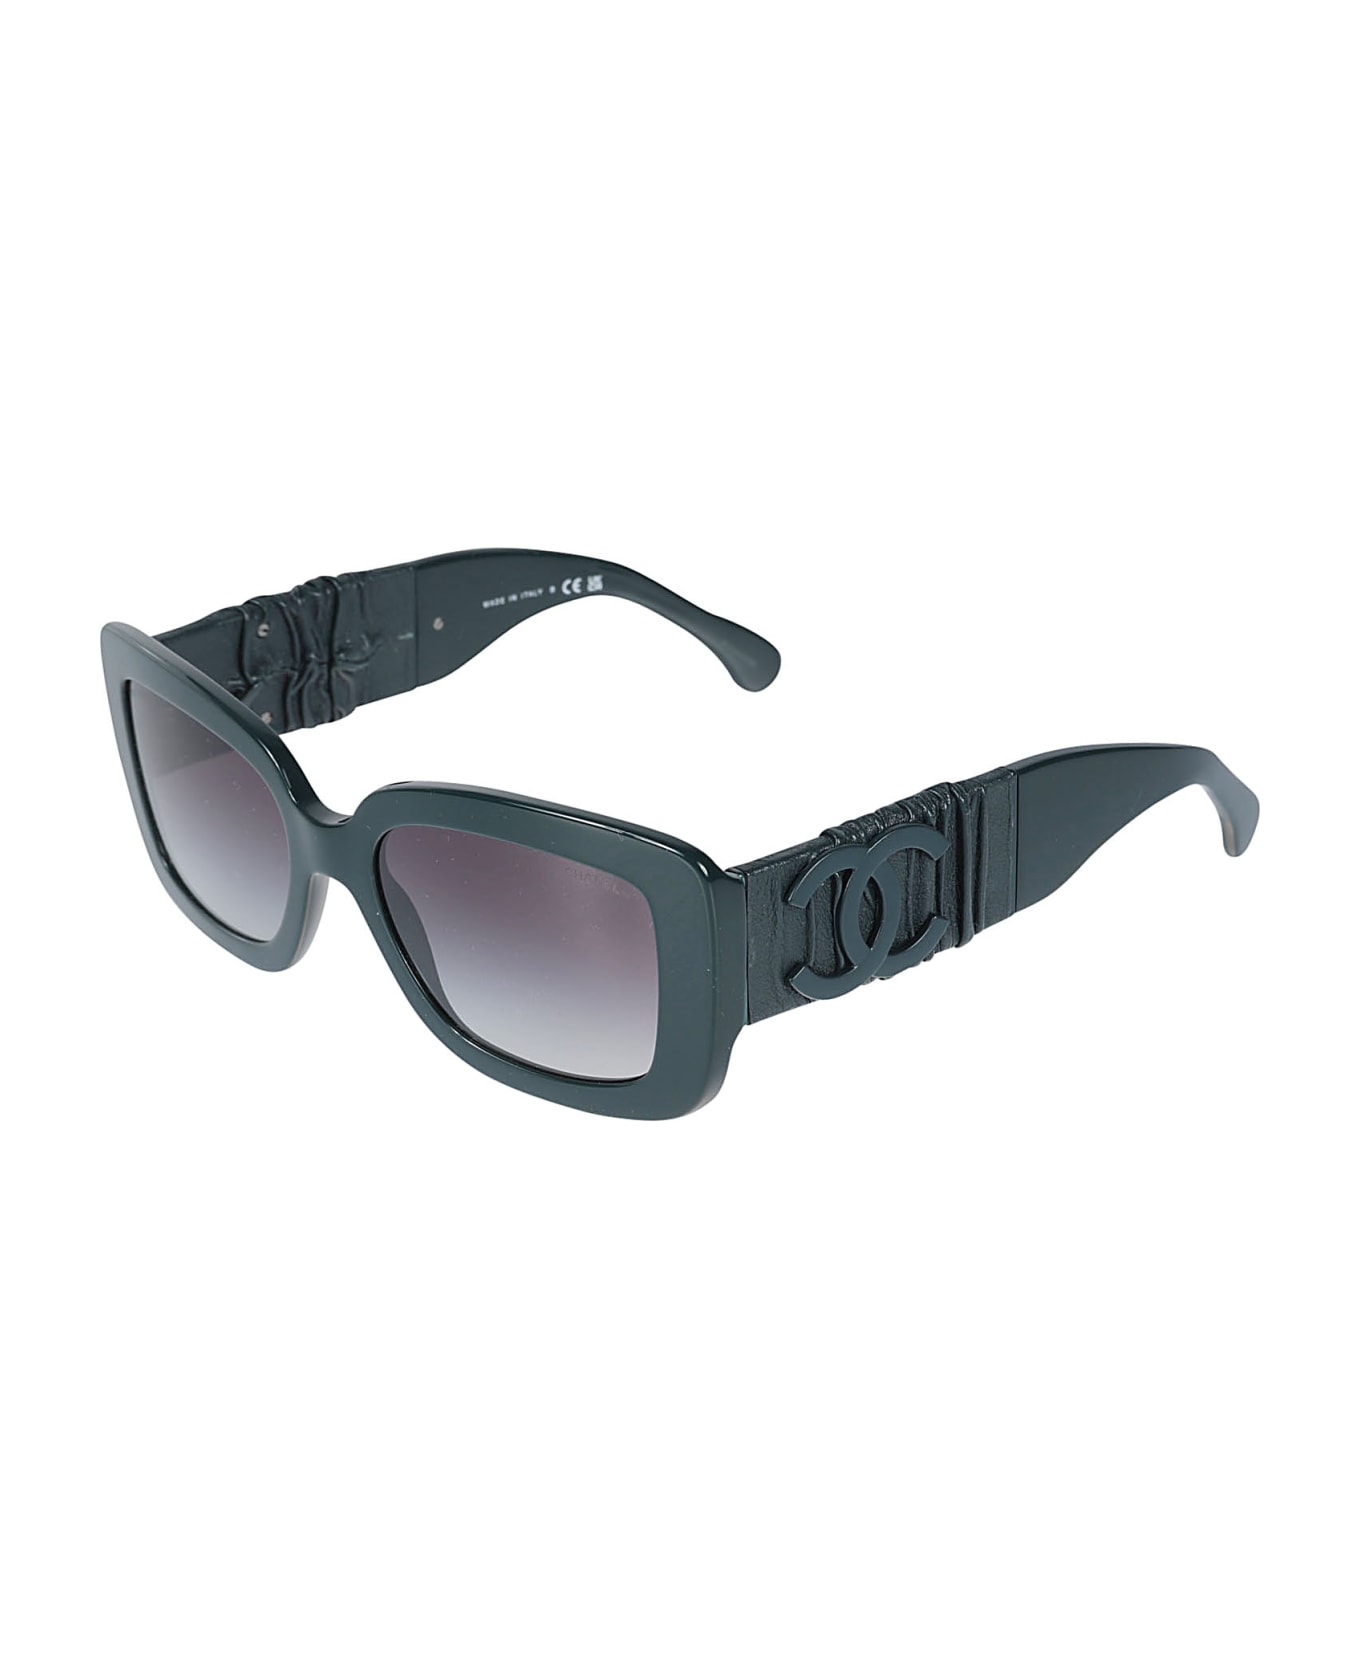 Chanel Square Frame Sunglasses - 1459s6 サングラス